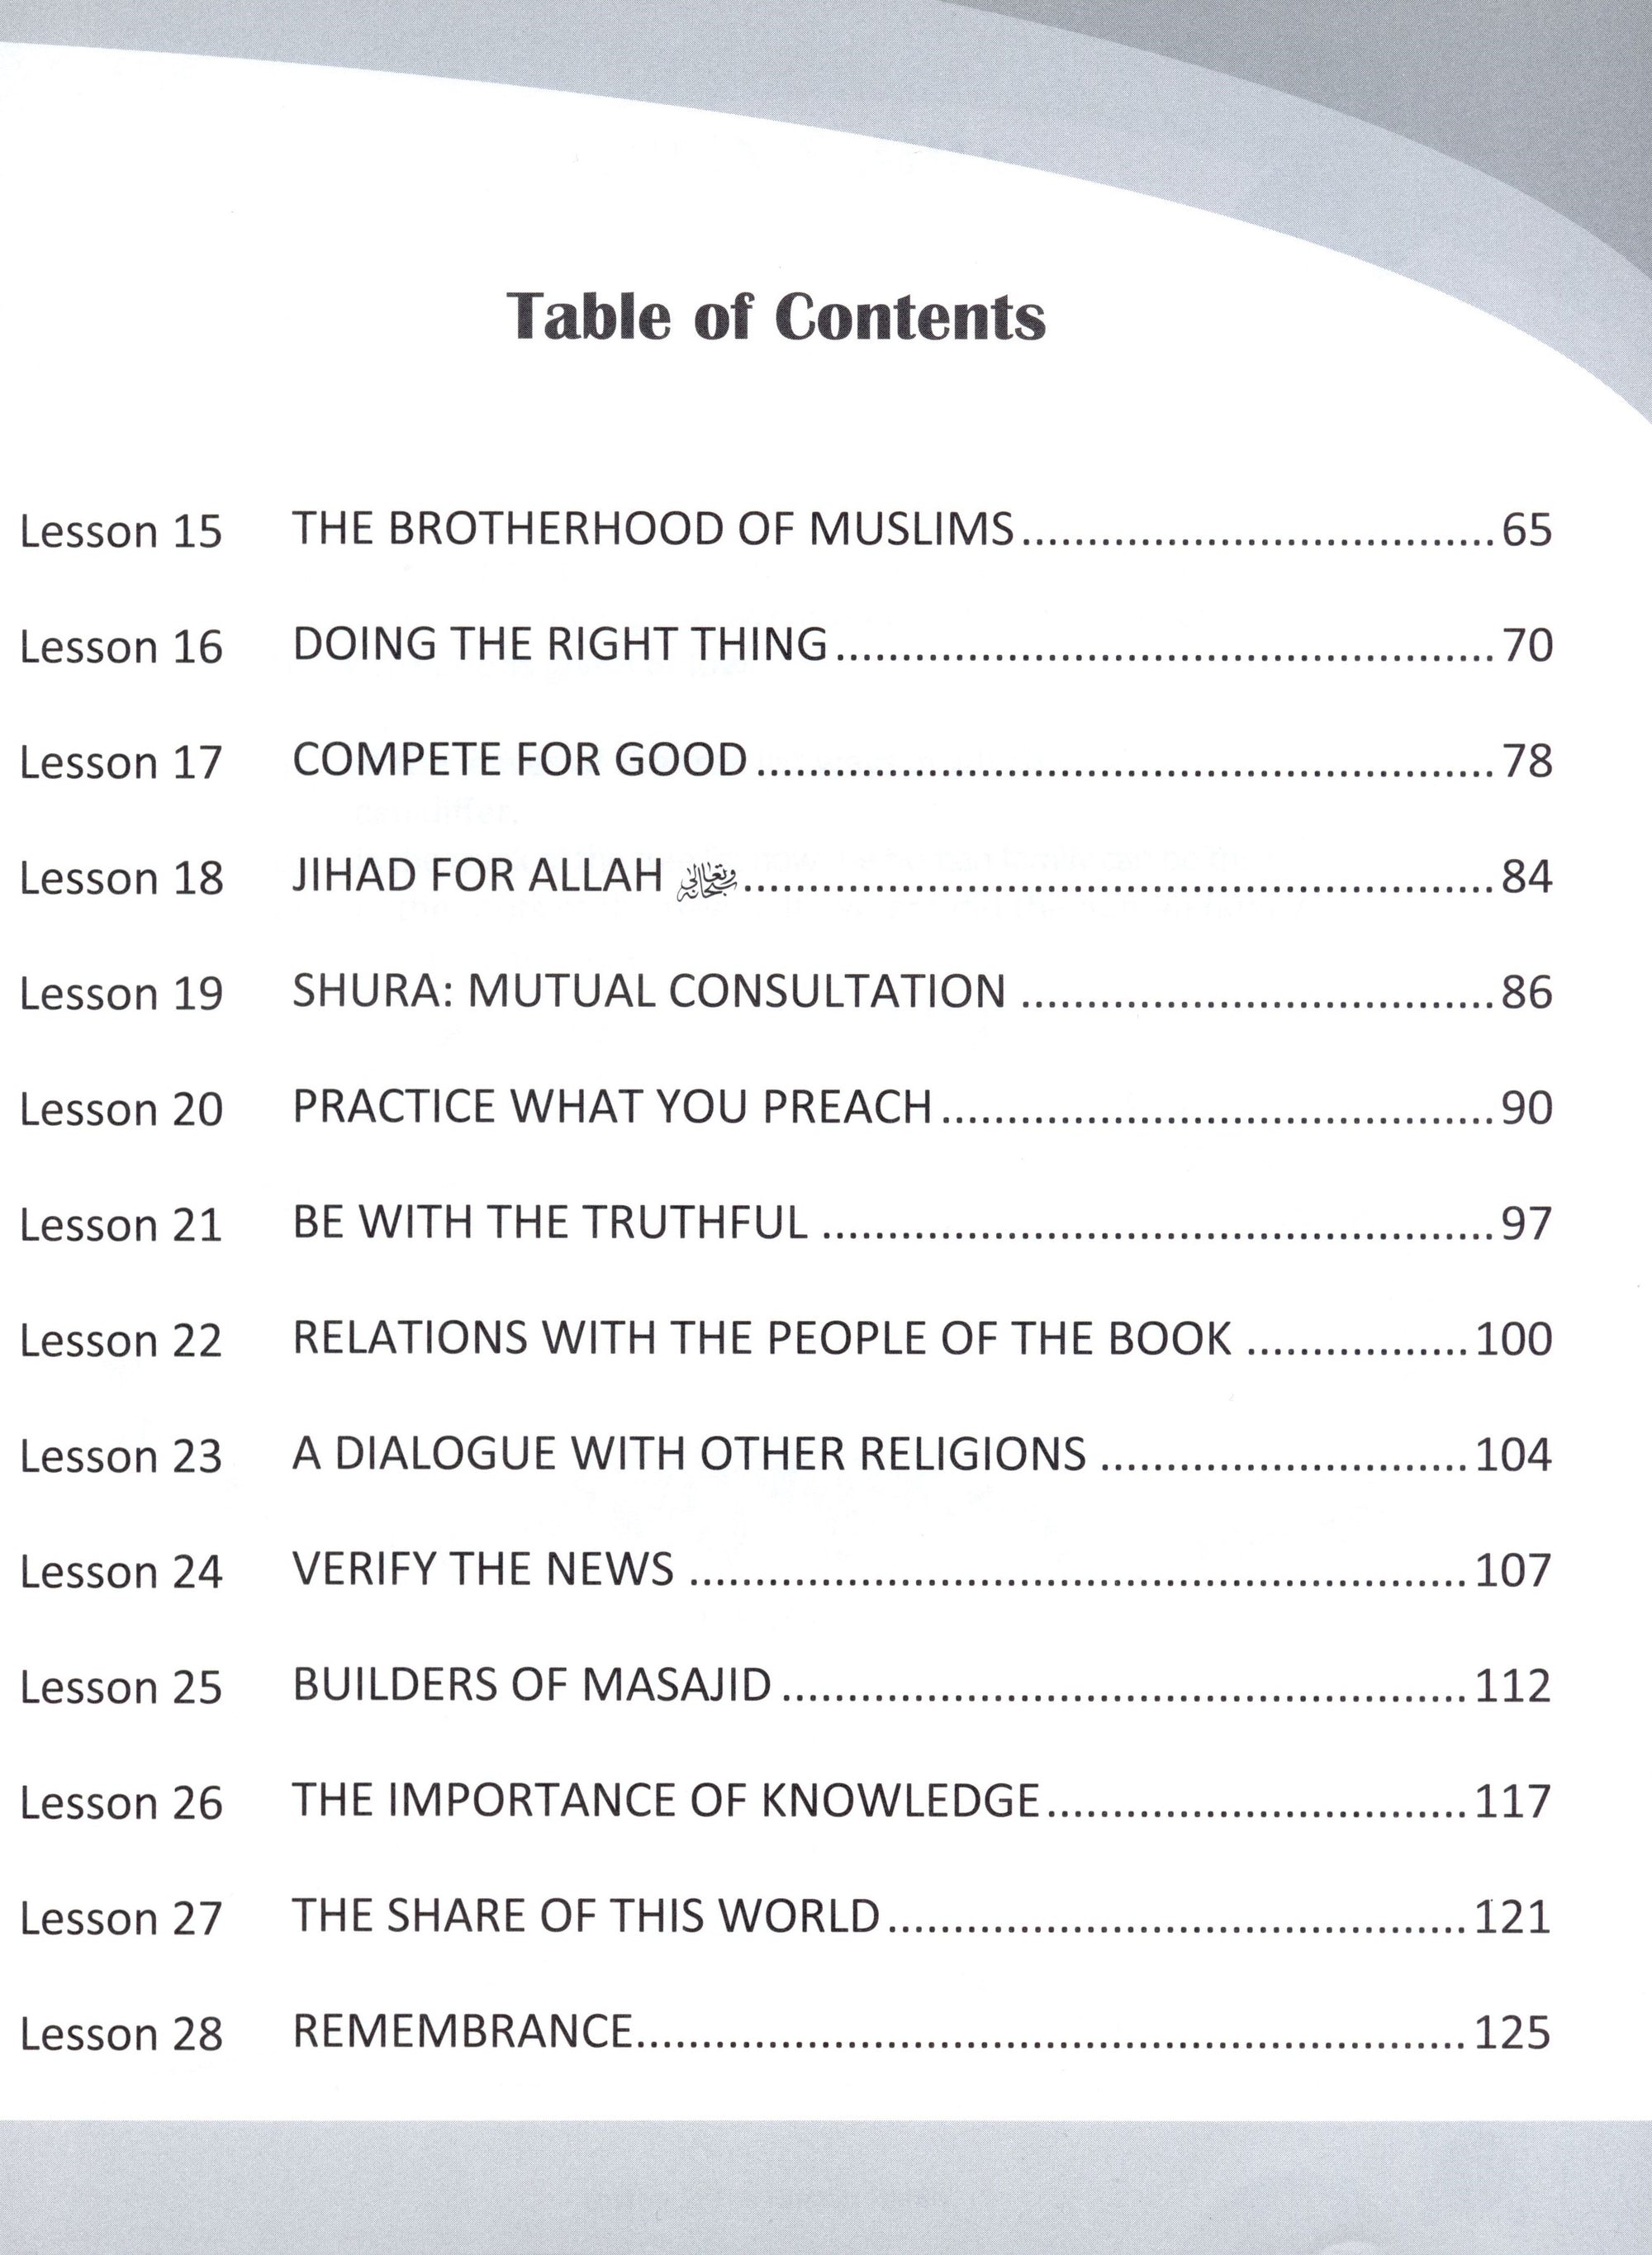 Teachings of the Qur'an Workbook Volume 3